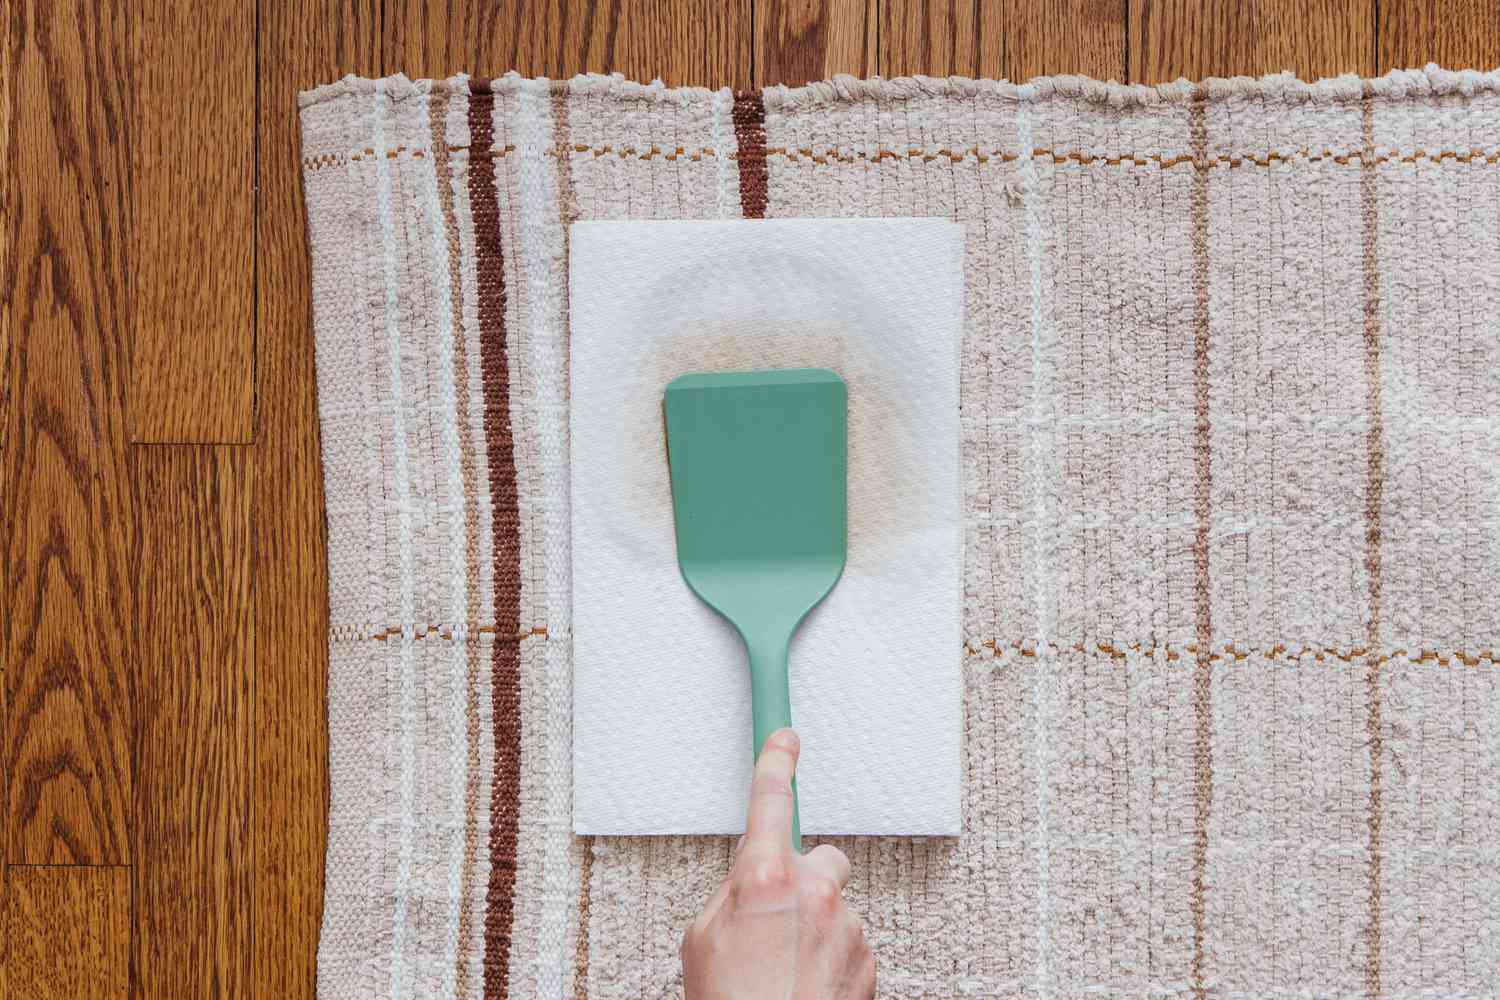 Secar la mancha de refresco con una toalla de papel